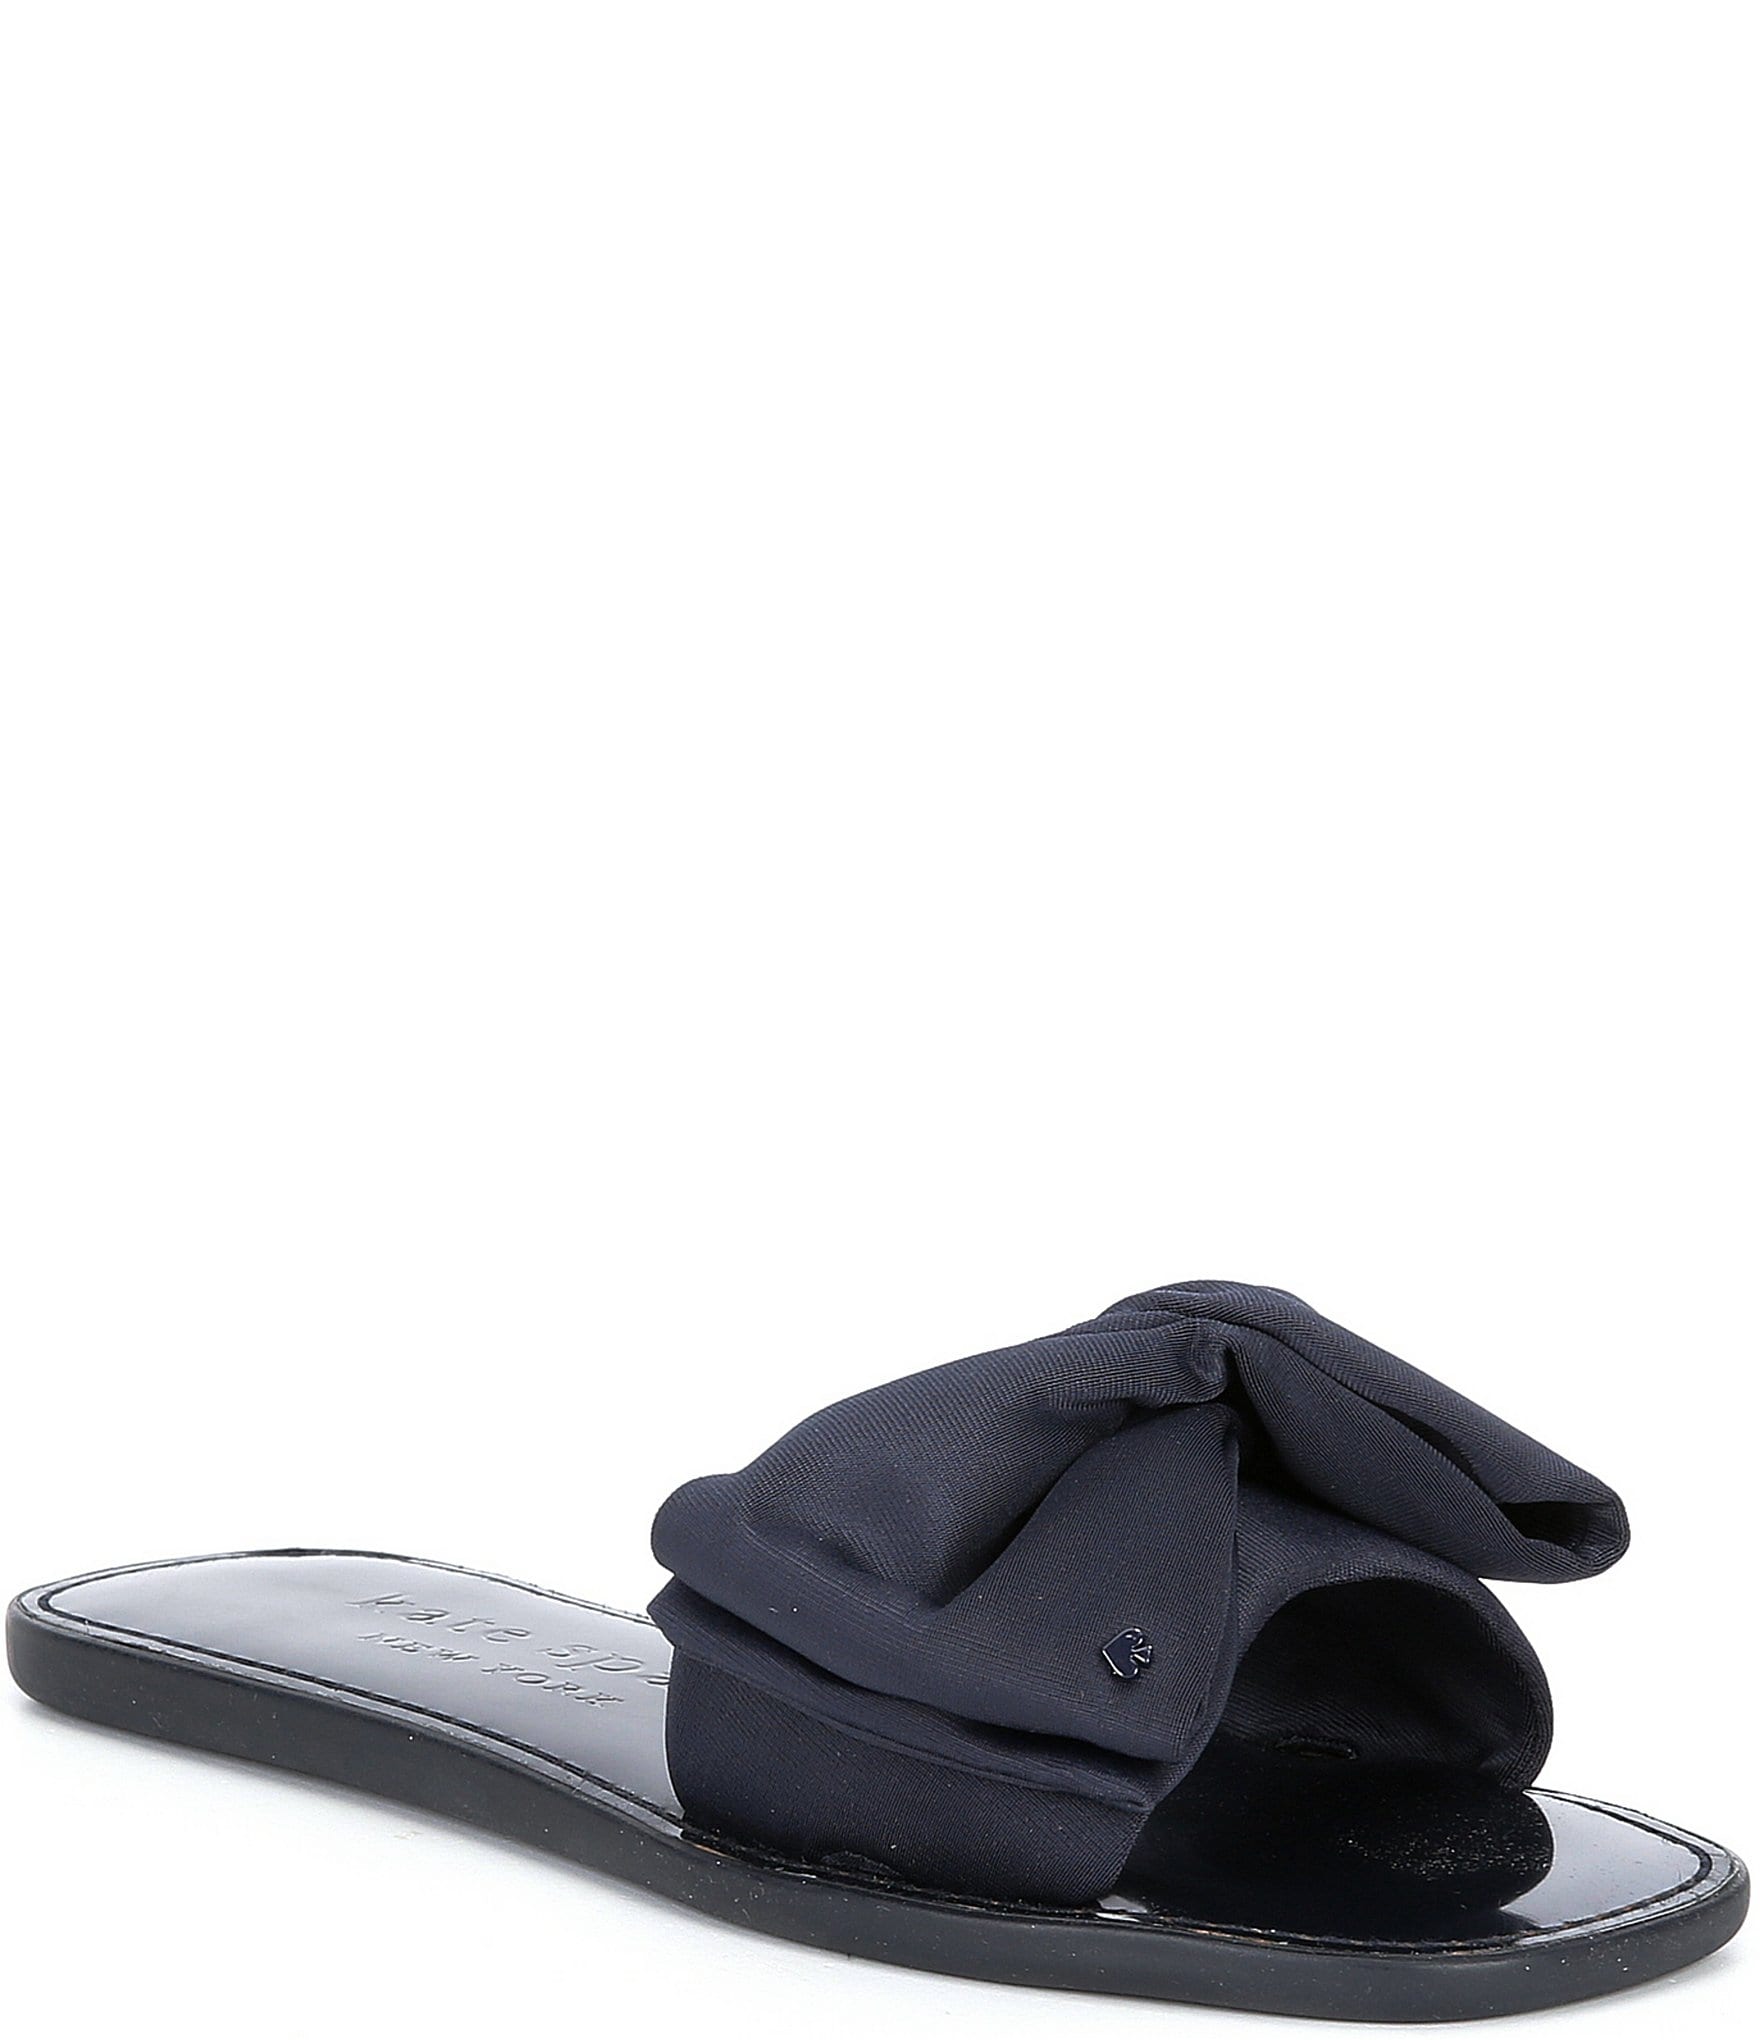 Kate Double Buckle Slider Sandals in Black